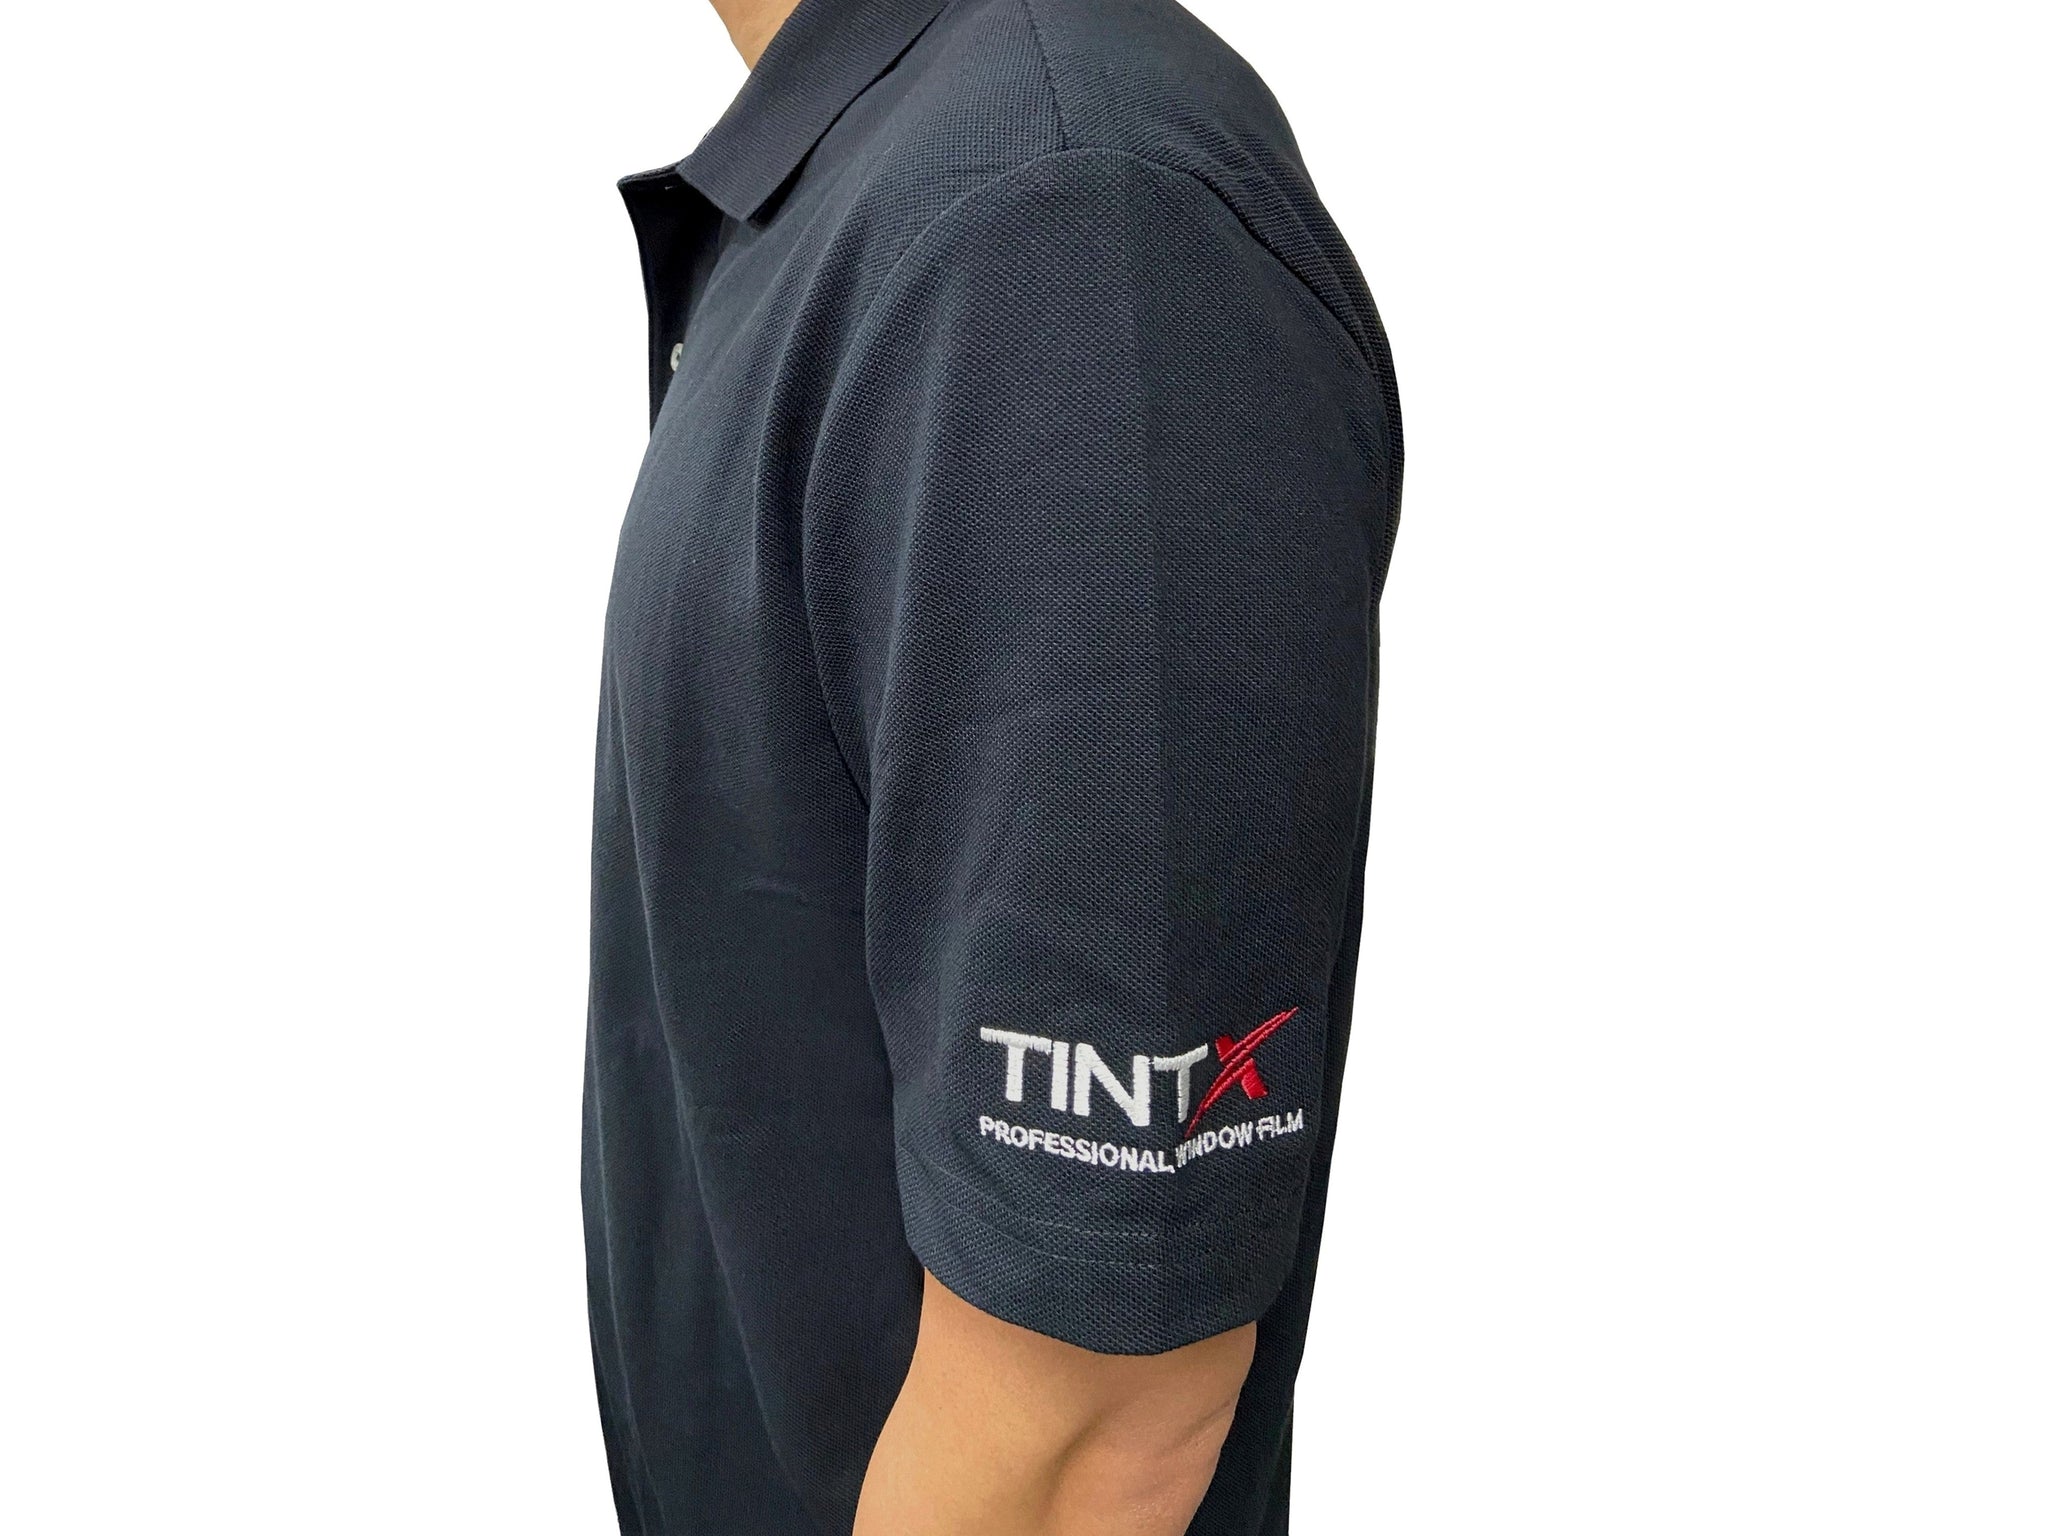 TintX Men's Polo Shirts Black Short Sleeve